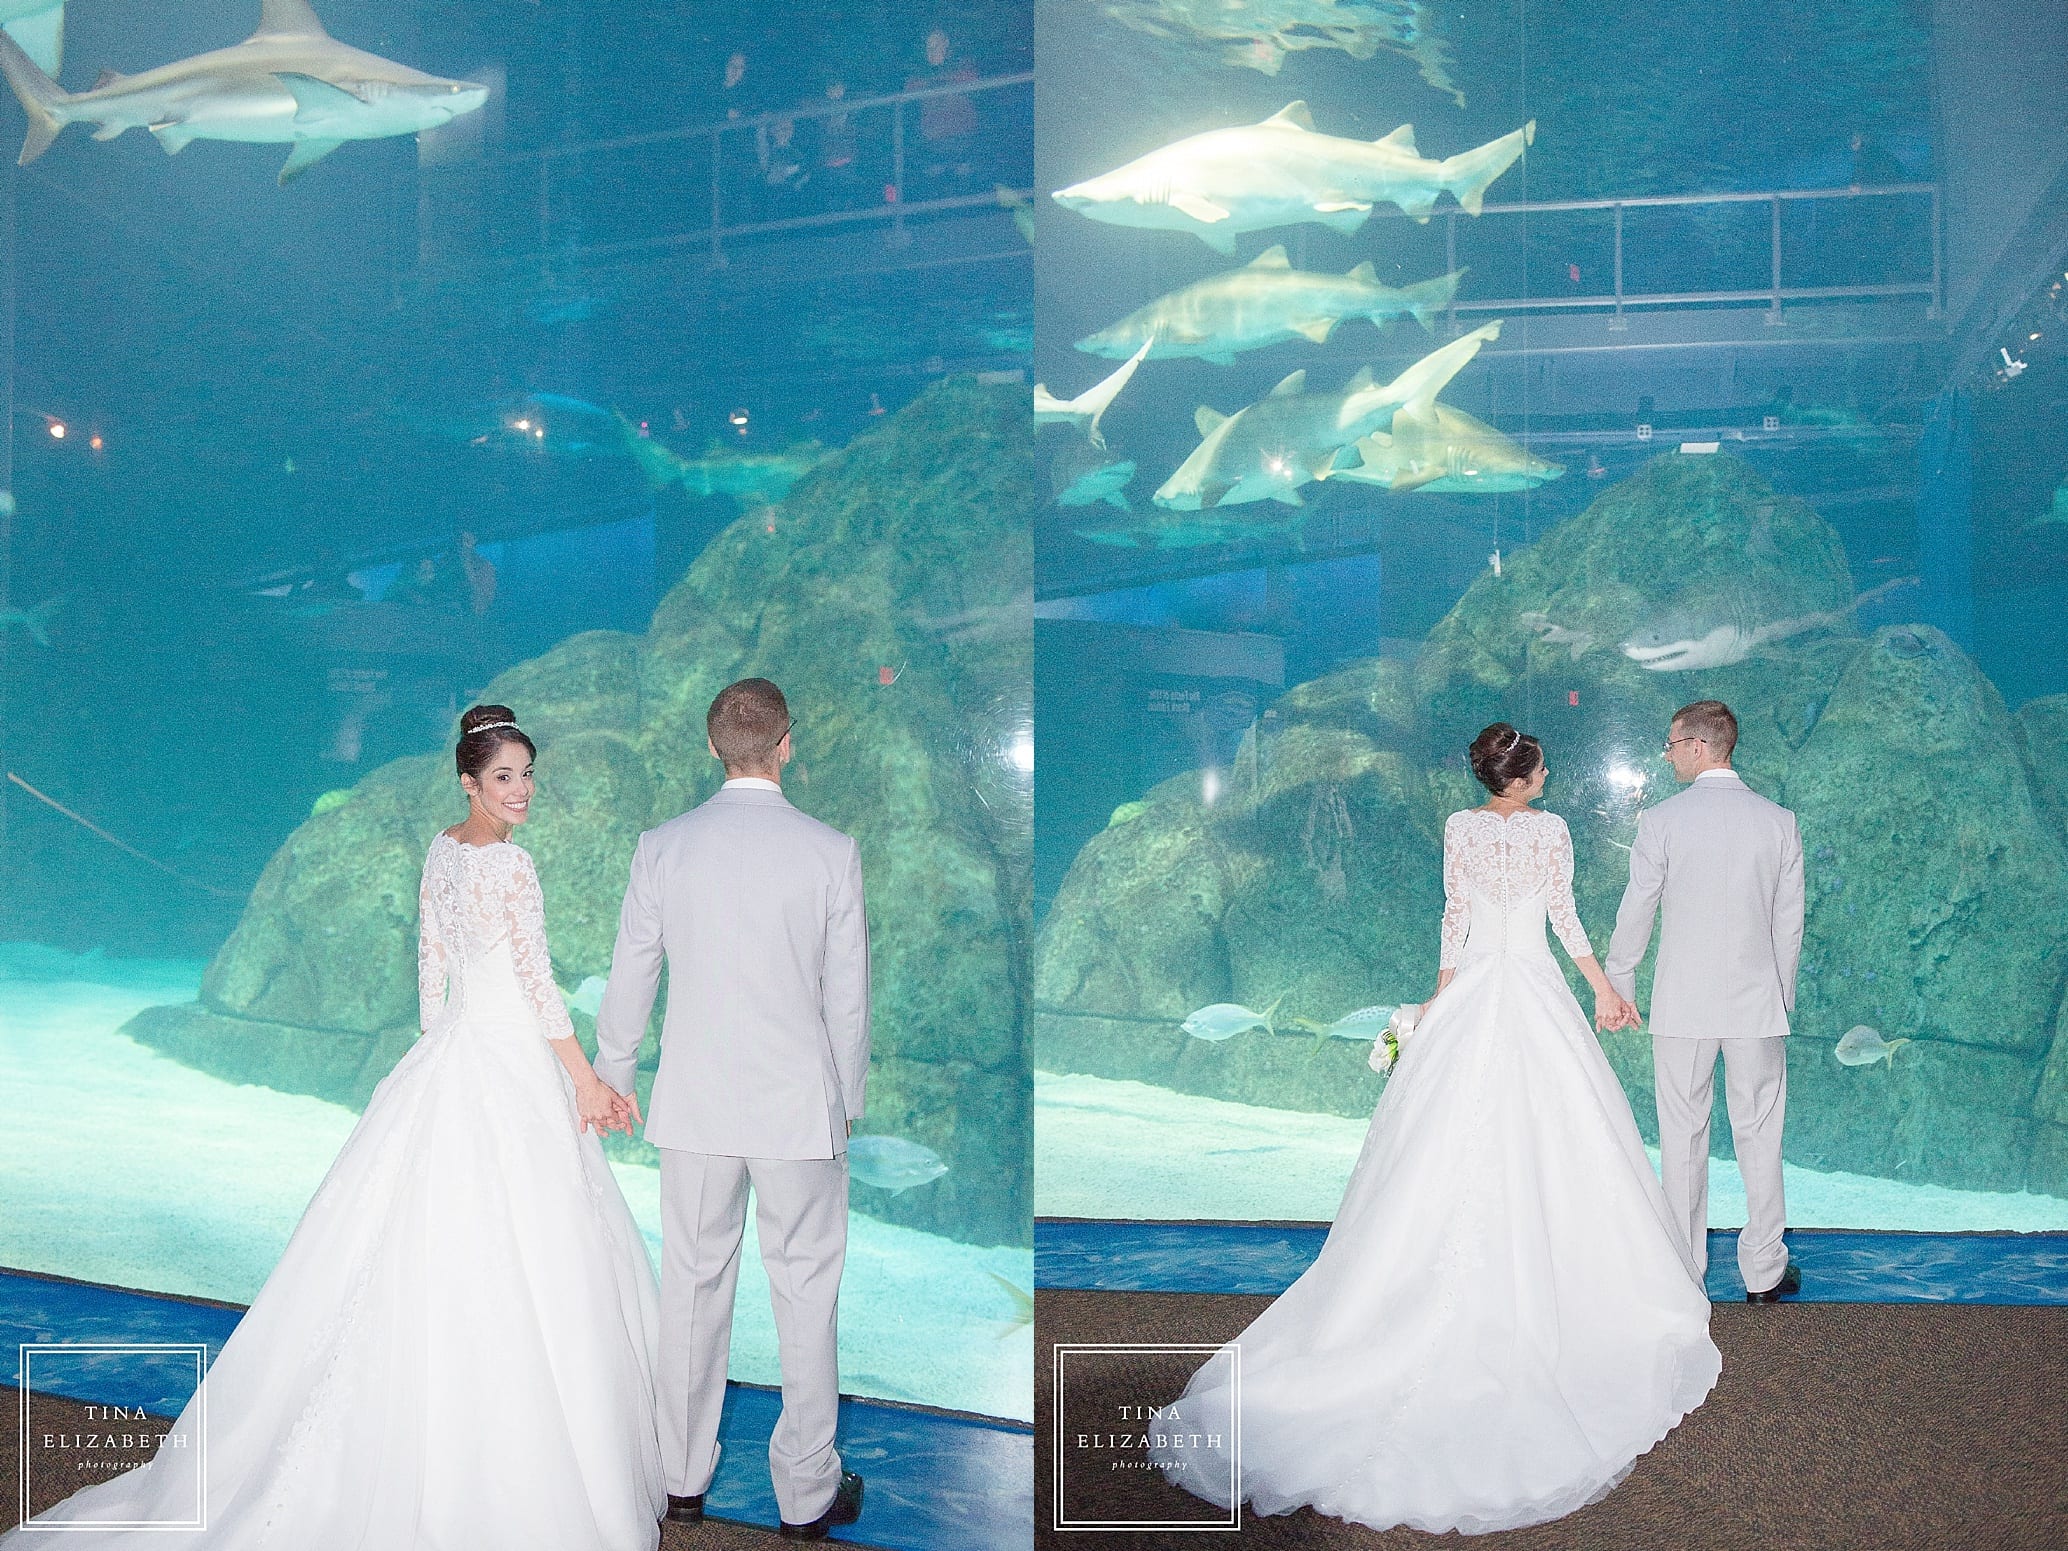 adventure-aquarium-wedding-photos-tina-elizabeth-photography_1064